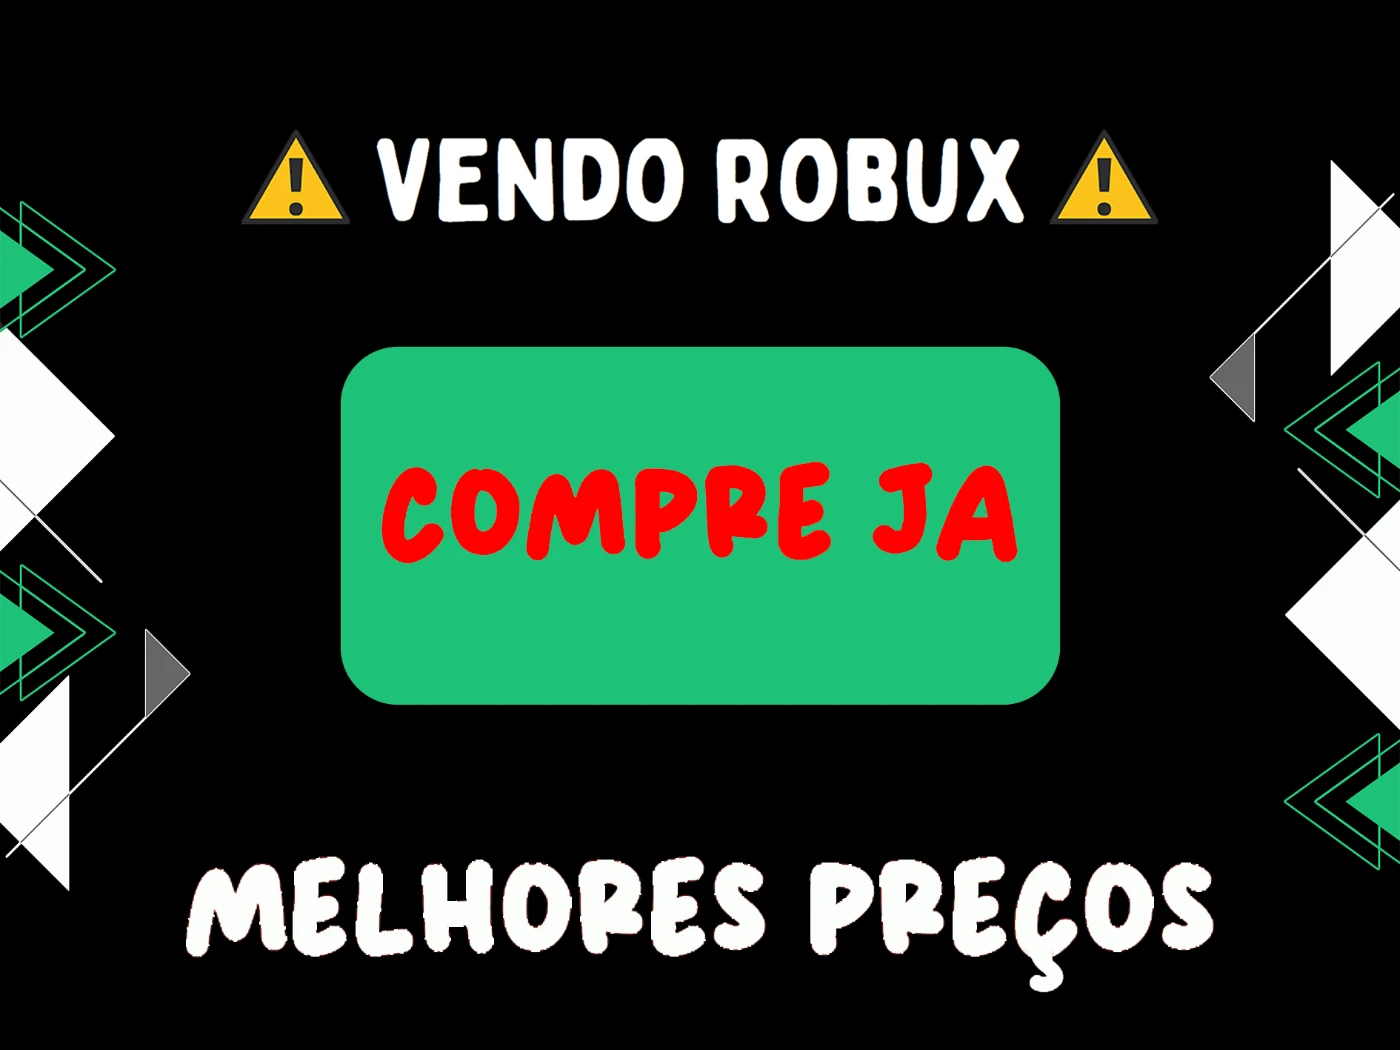 Roblox > Robux Baratos (ENVIO IMEDIATO)